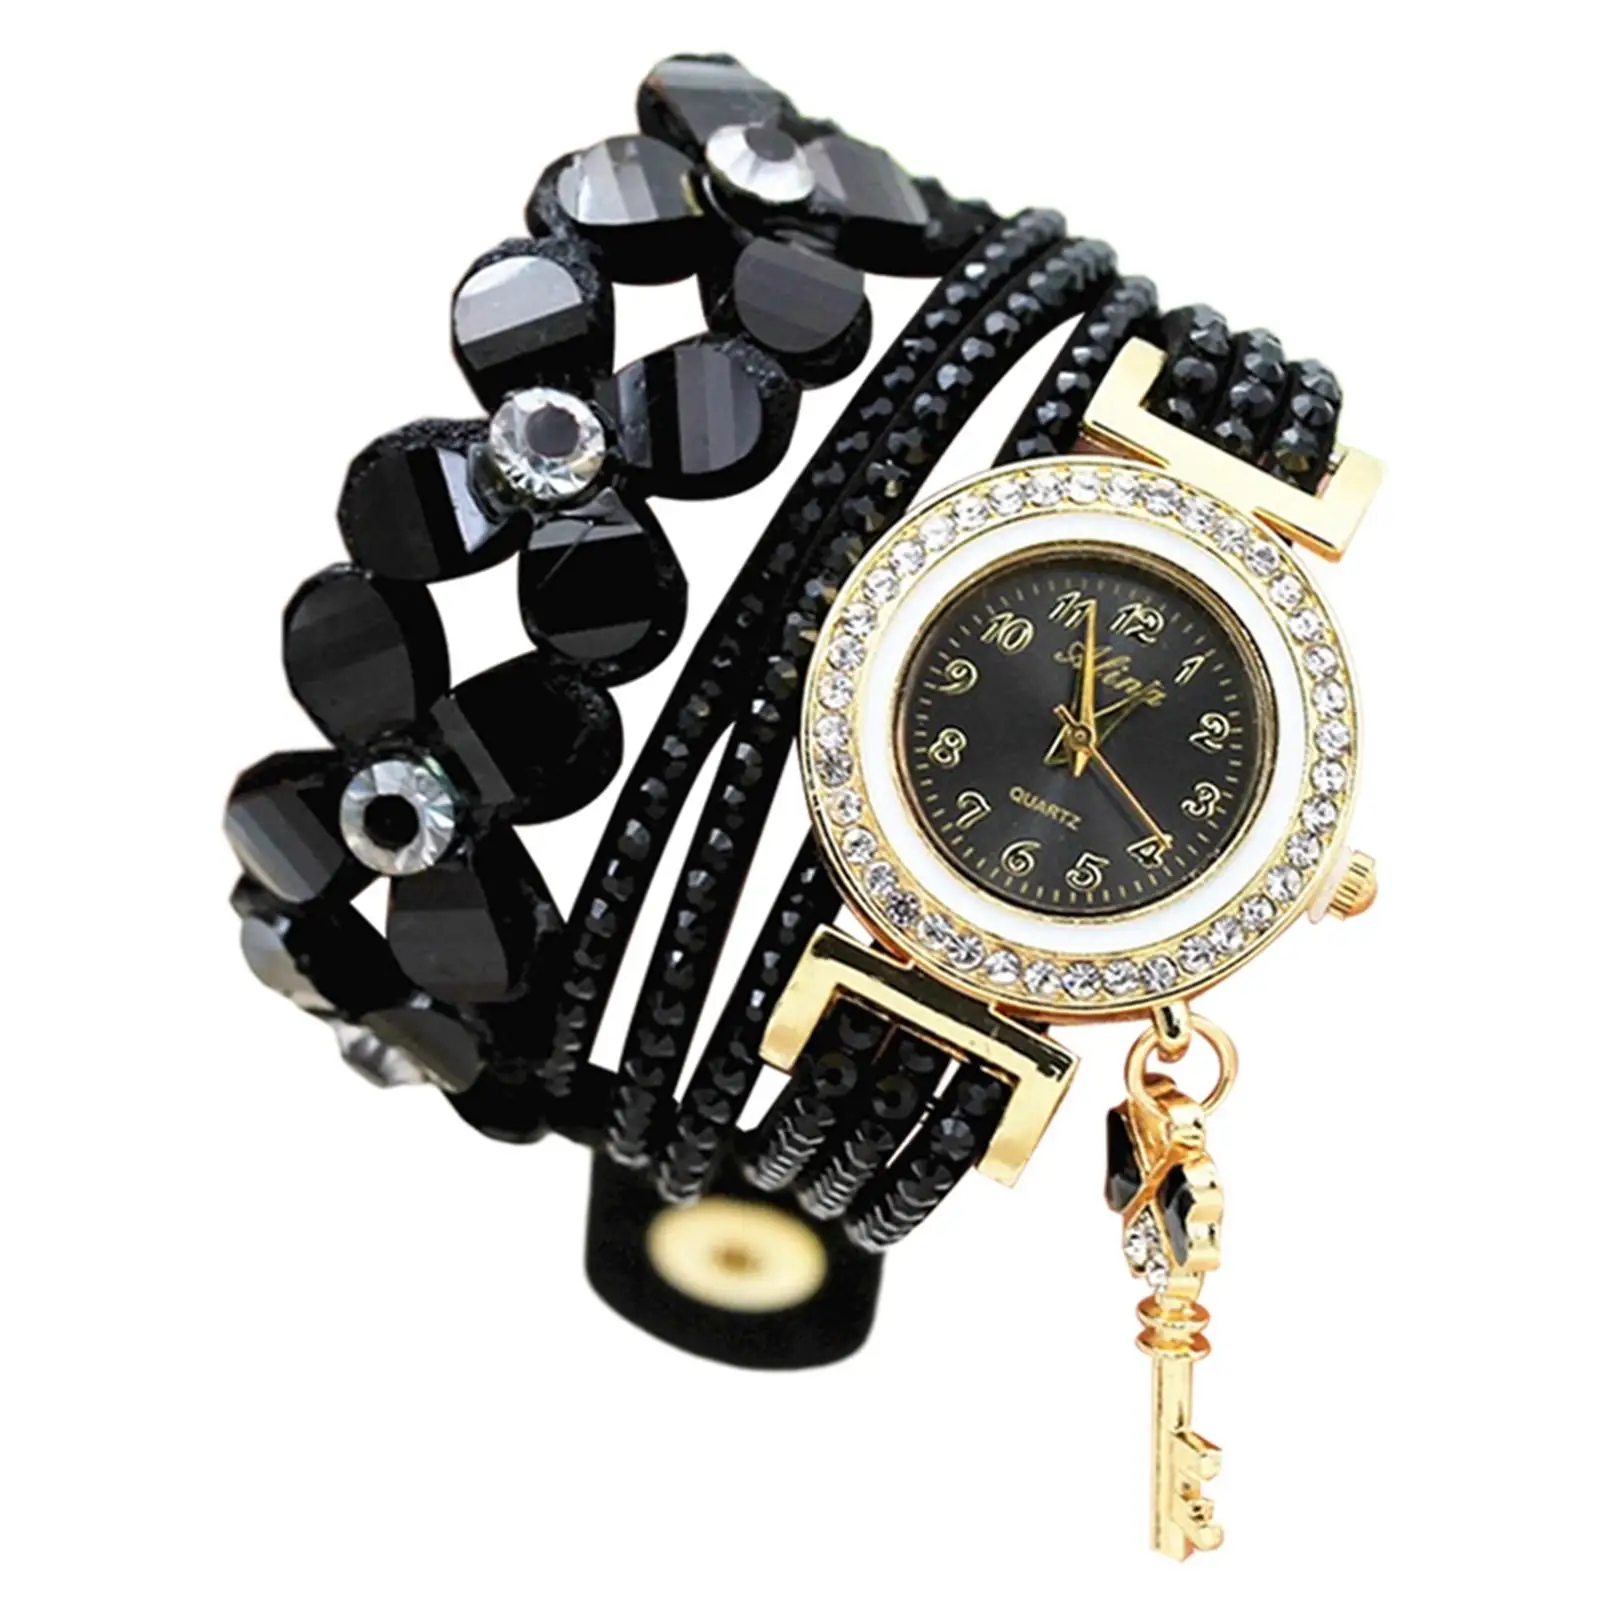 Bracelet Watch Strap Watch Fashion Women Lightweight Portable Pointer Wristwatch for Travel Shopping Hiking Street Backpacking